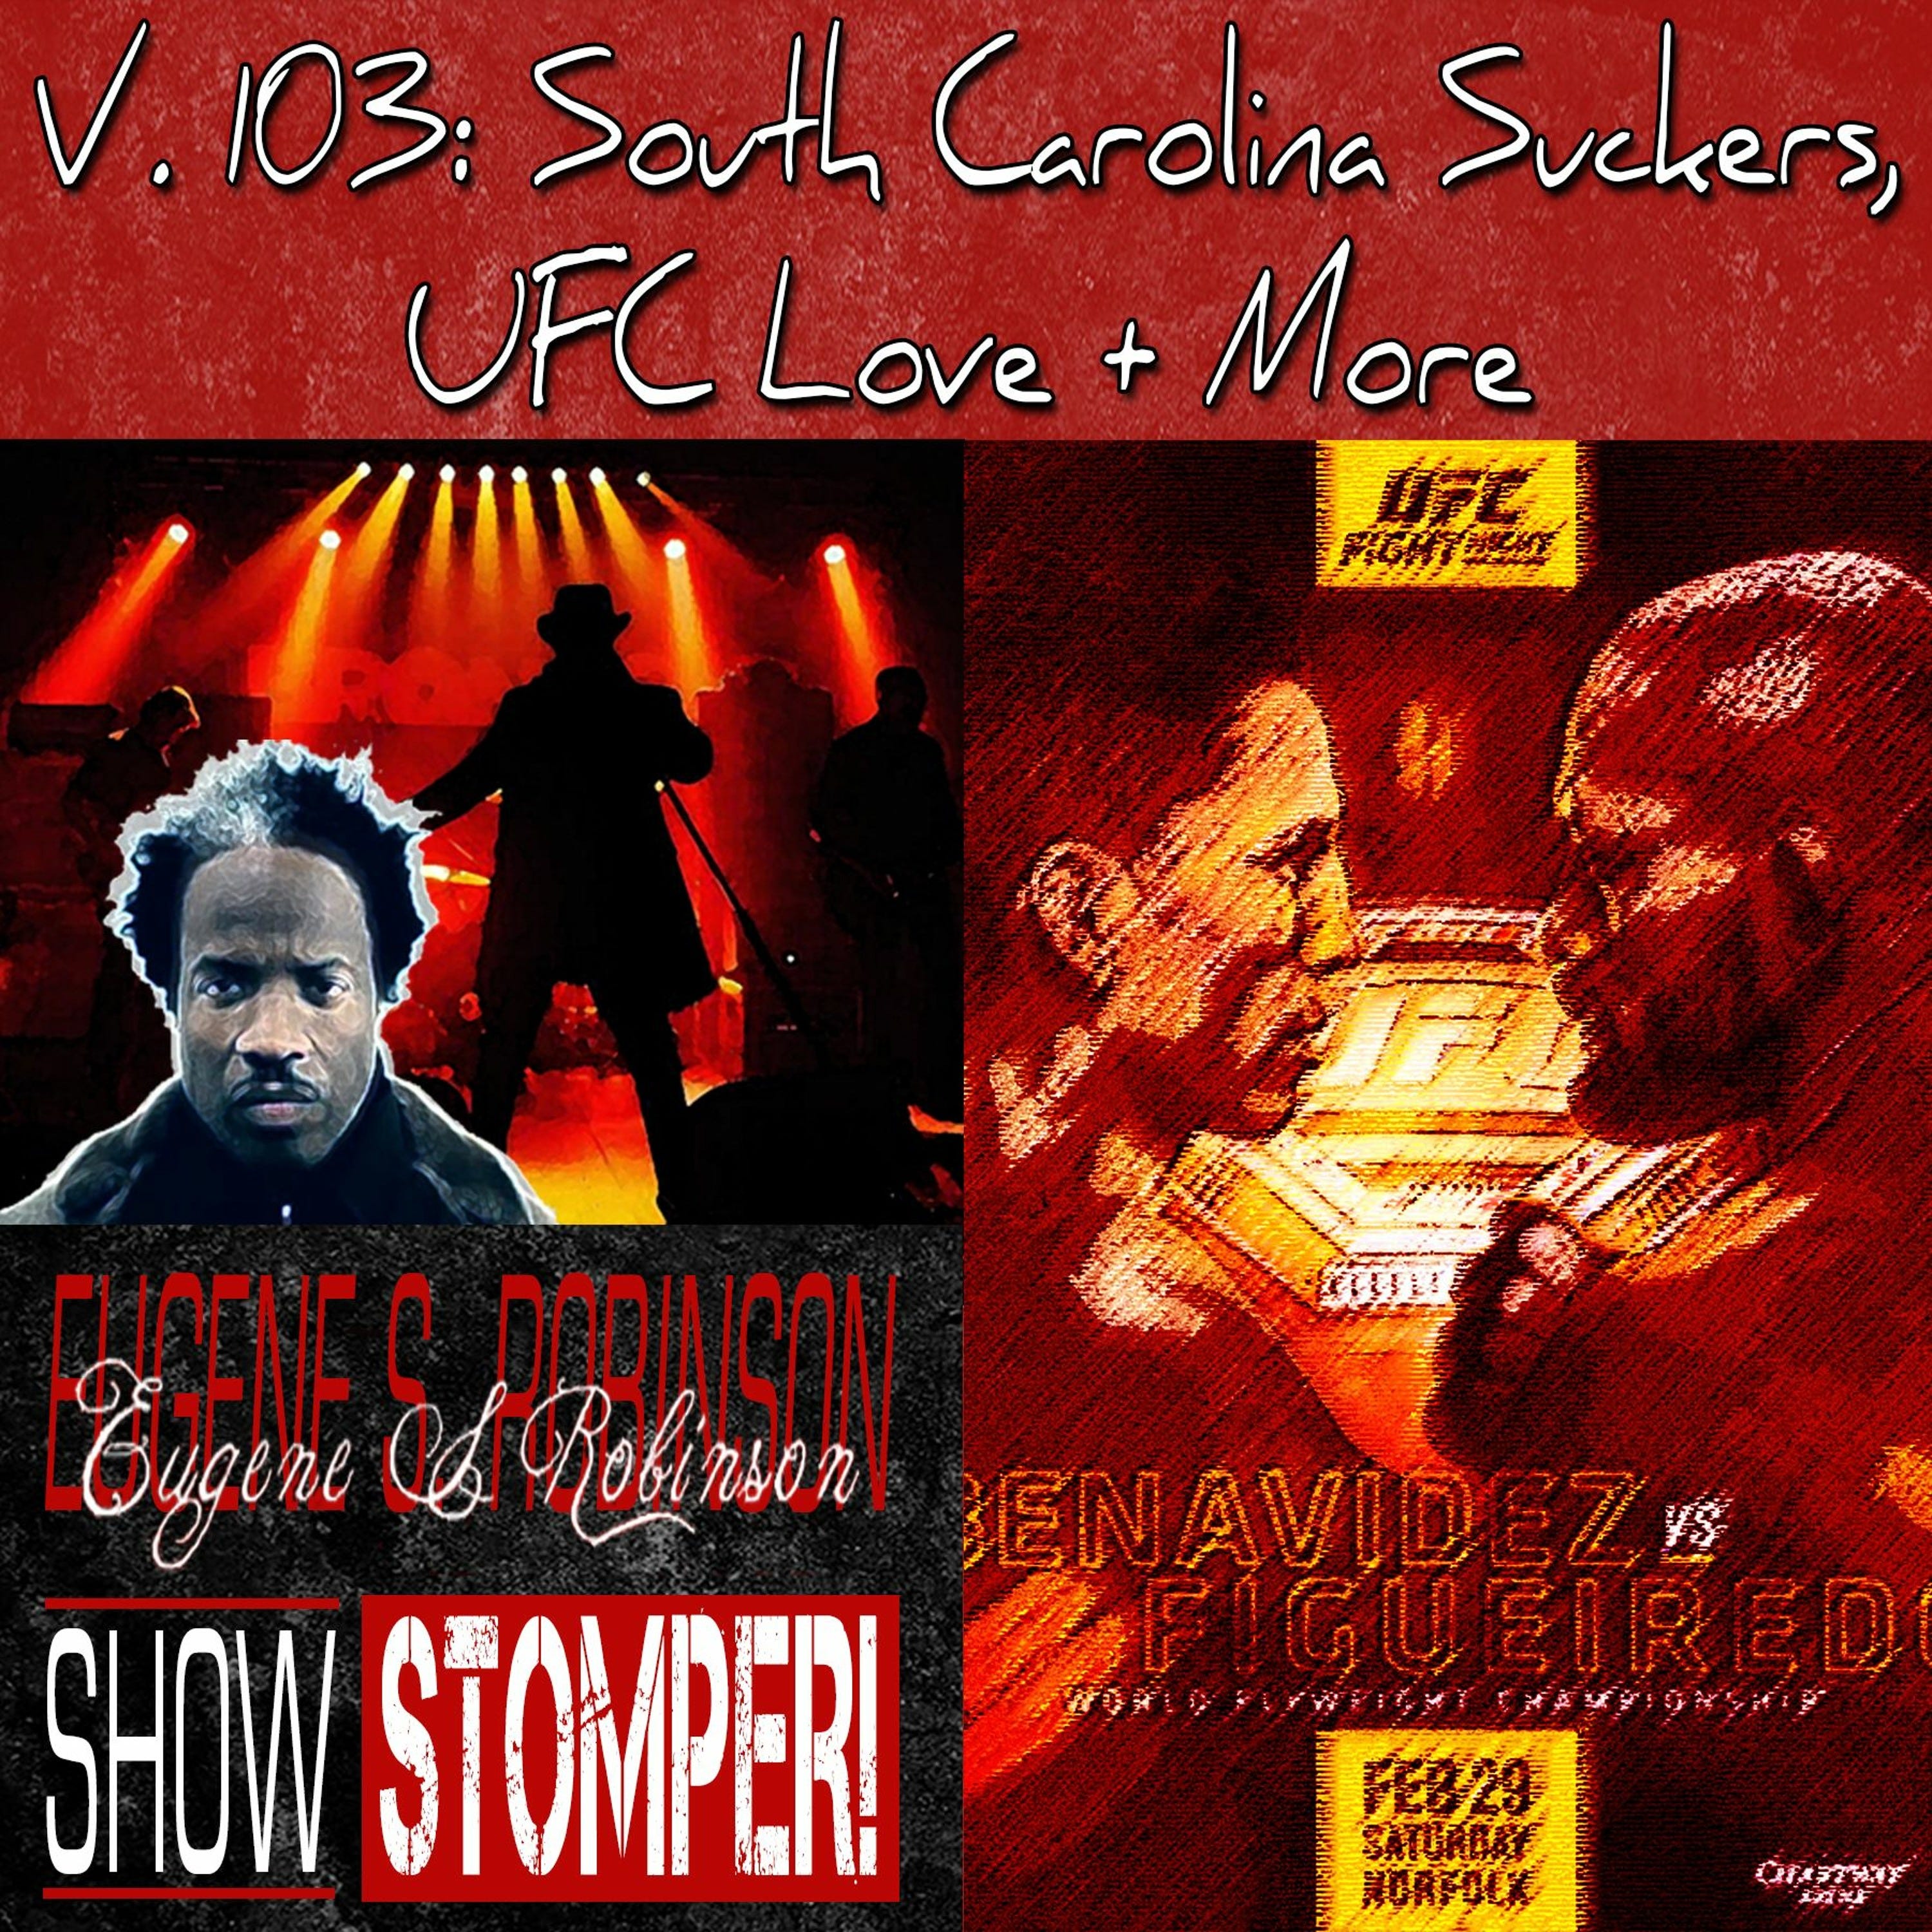 V. 103 South Carolina Suckers, UFC Love + More On The Eugene S. Robinson Show Stomper!